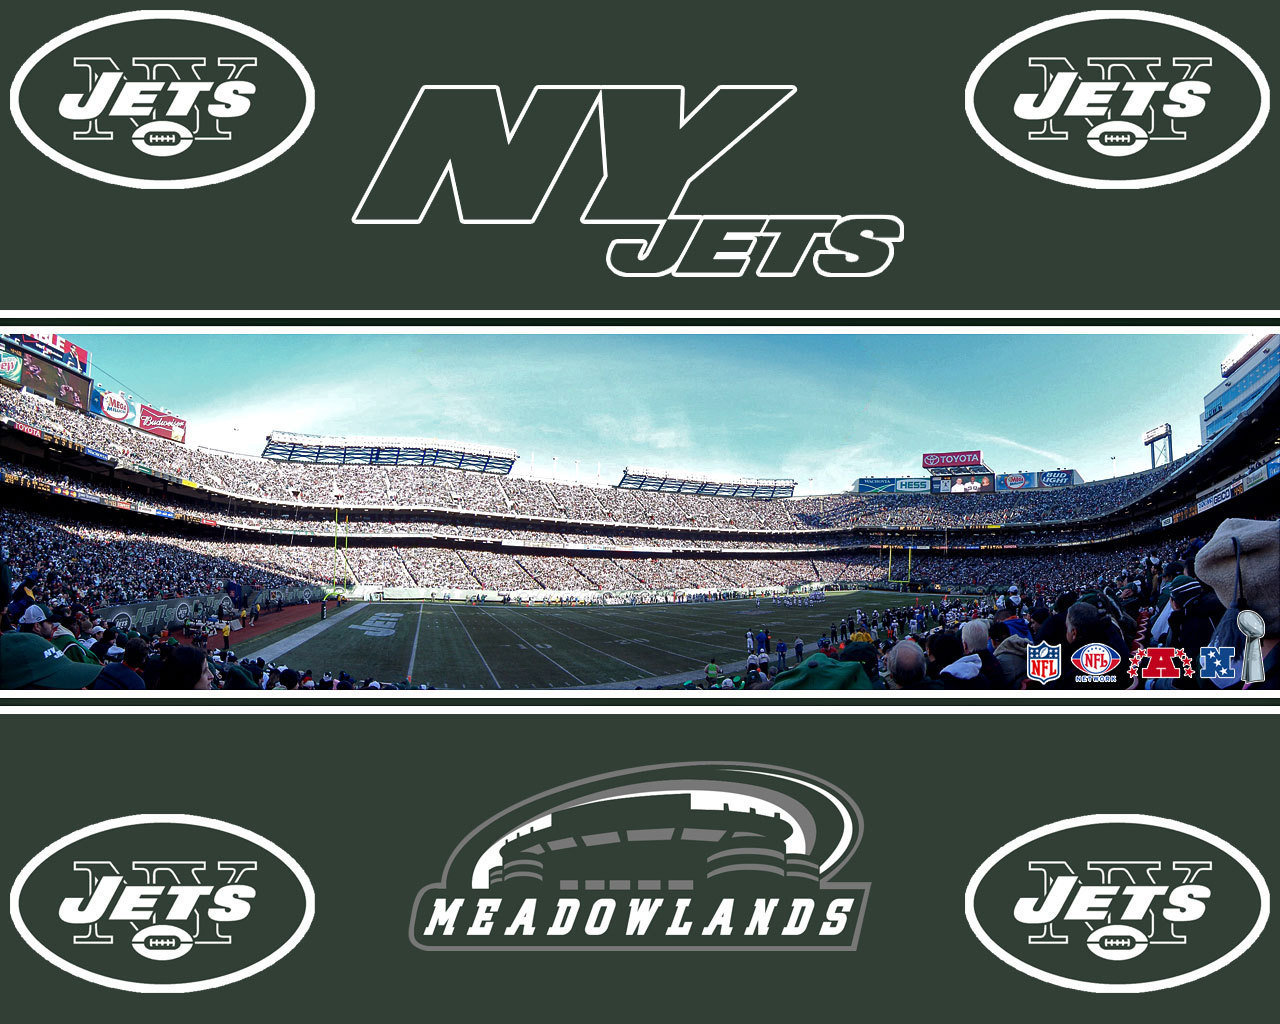 Free New York Jets desktop wallpaper New York Jets wallpapers